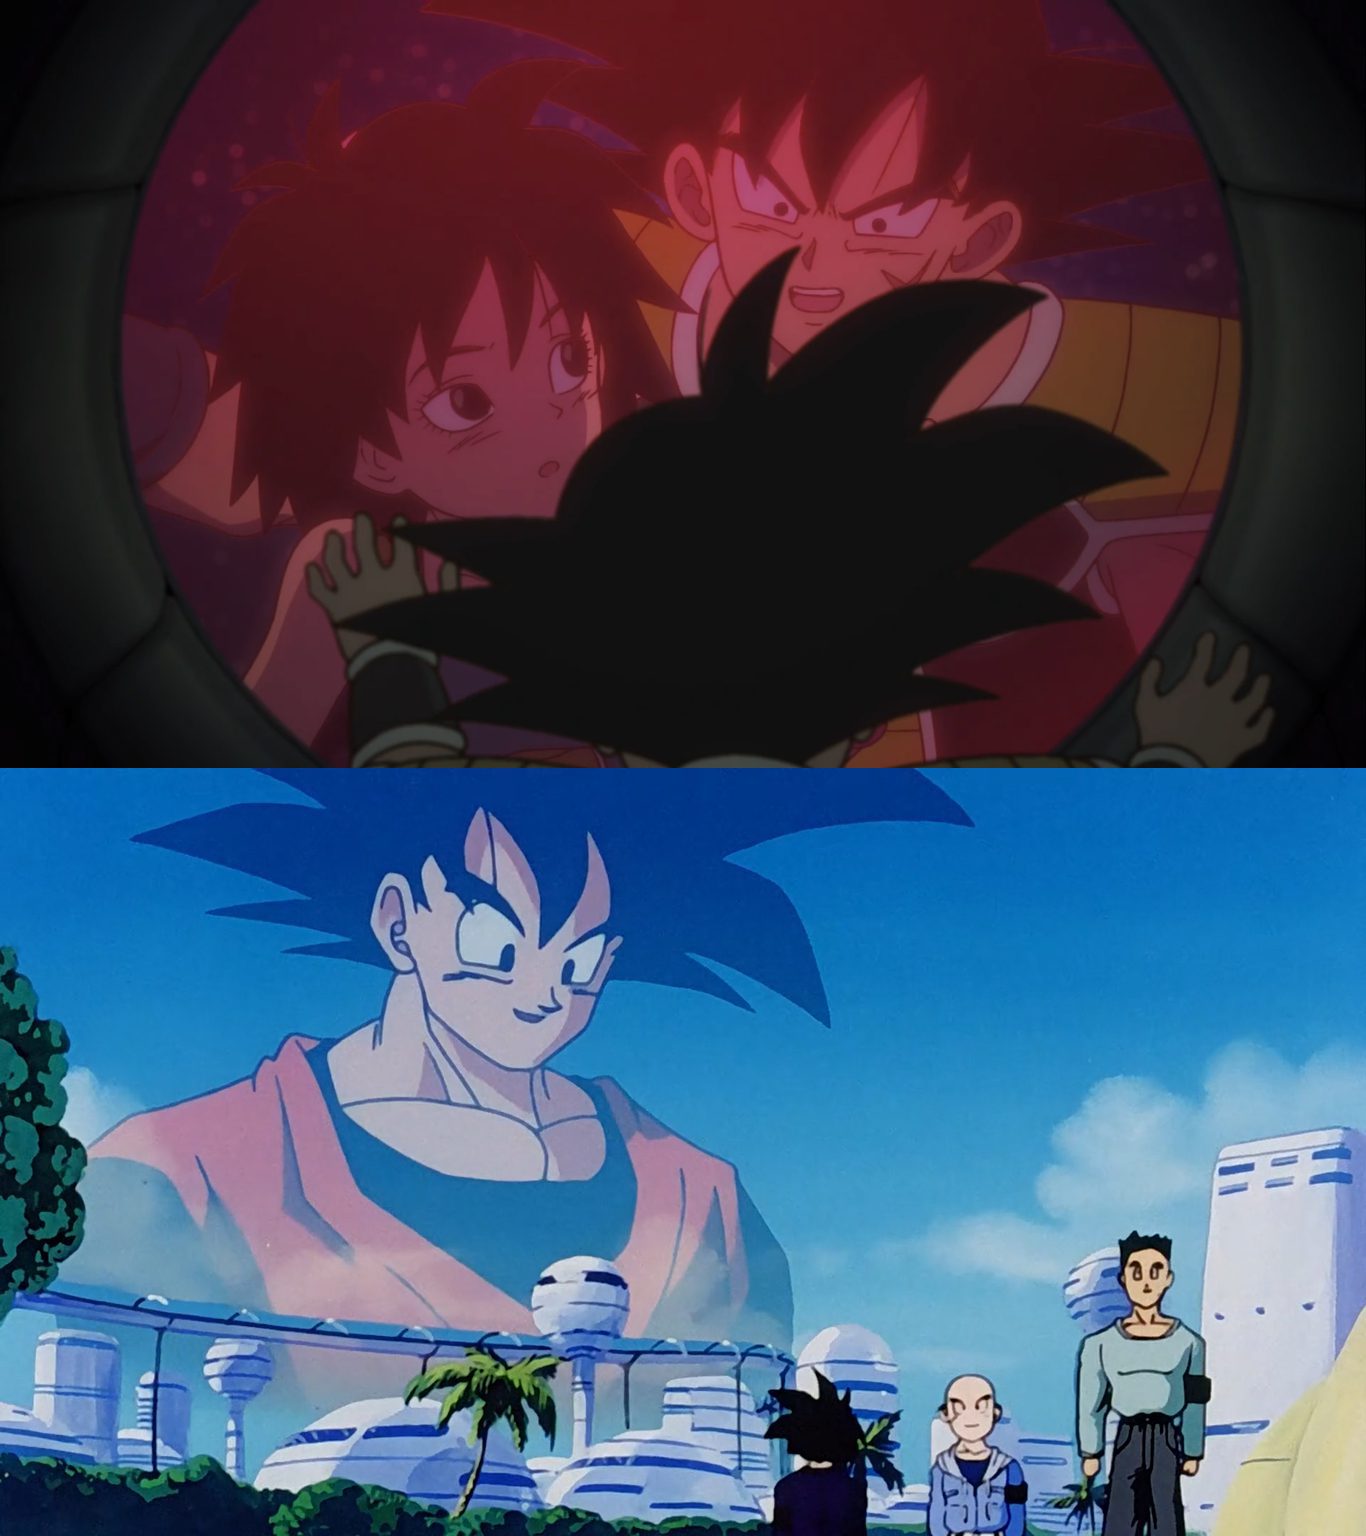 Like Bardock, like Goku